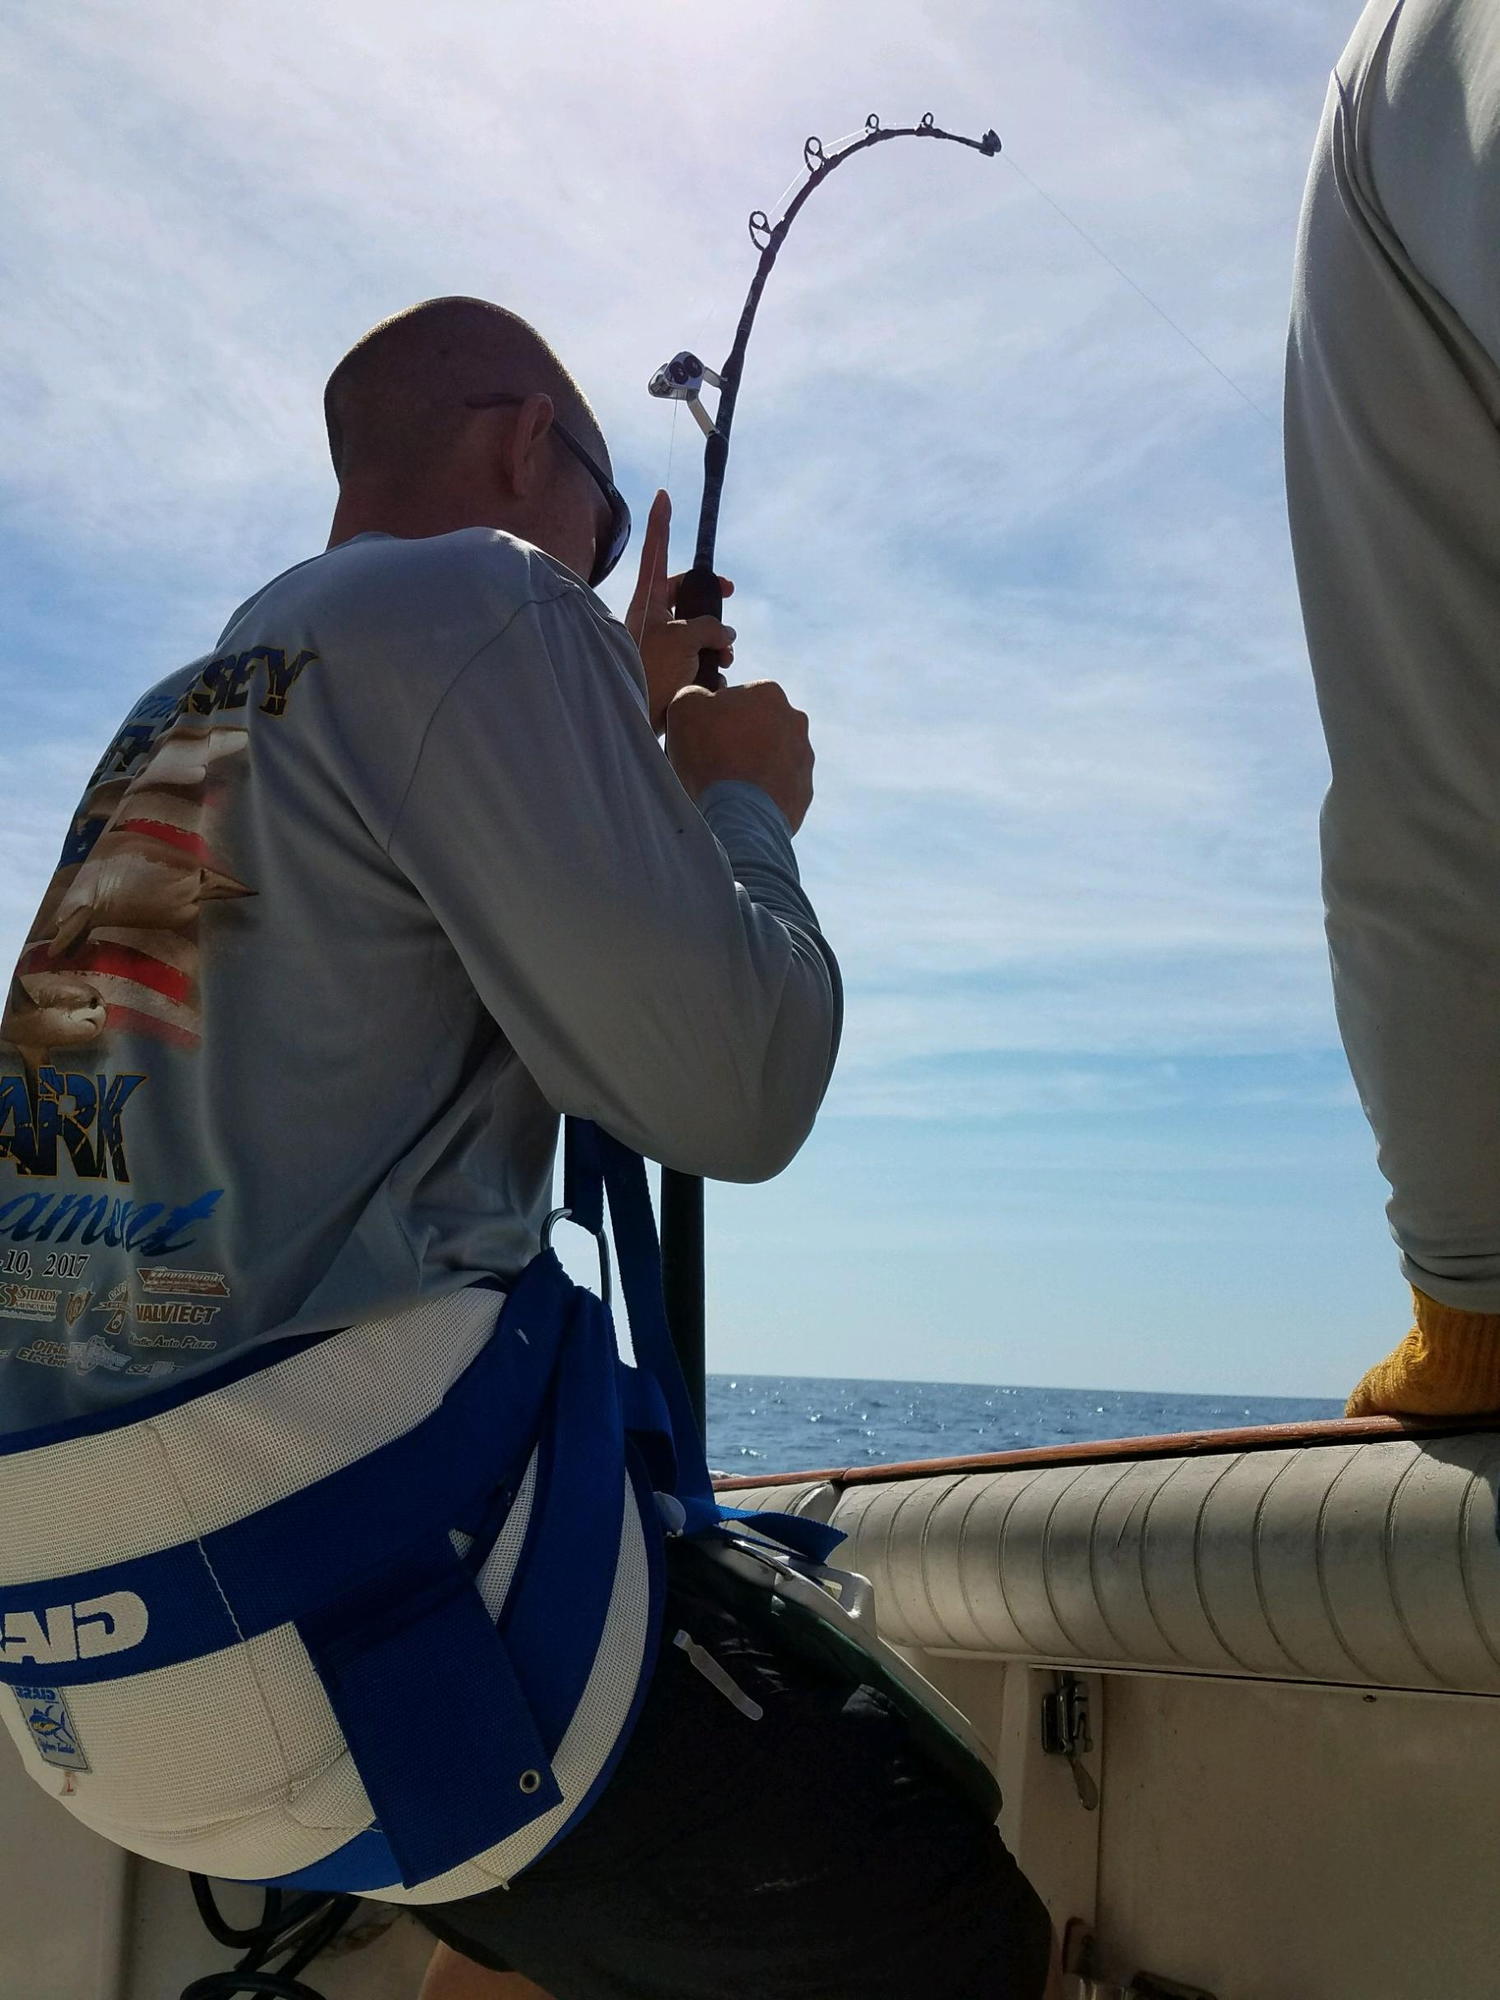 Best blank for custom standup tuna rod? - The Hull Truth - Boating